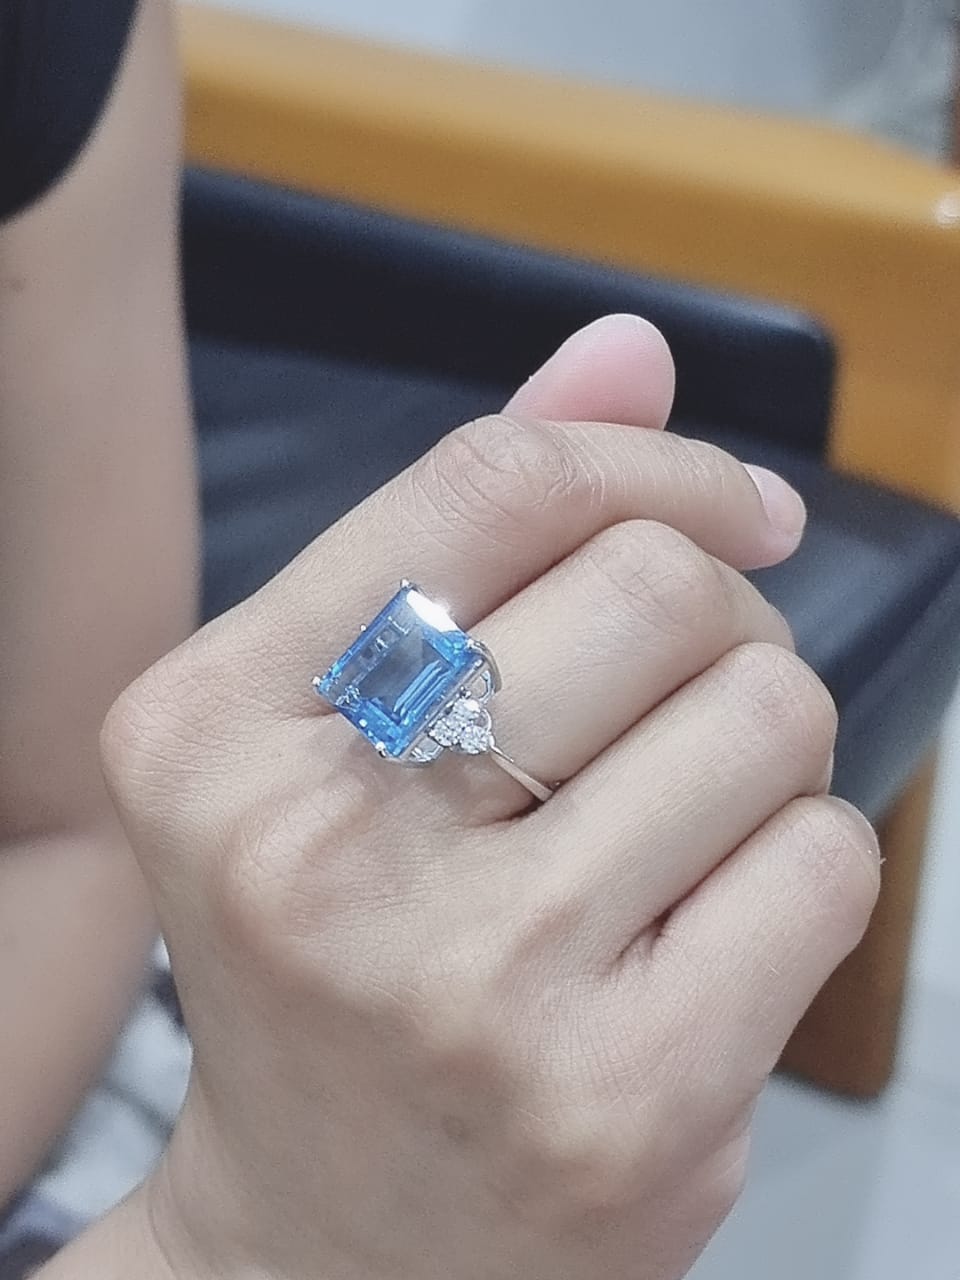 Blue Topaz And Diamond Ring In 18k White Gold